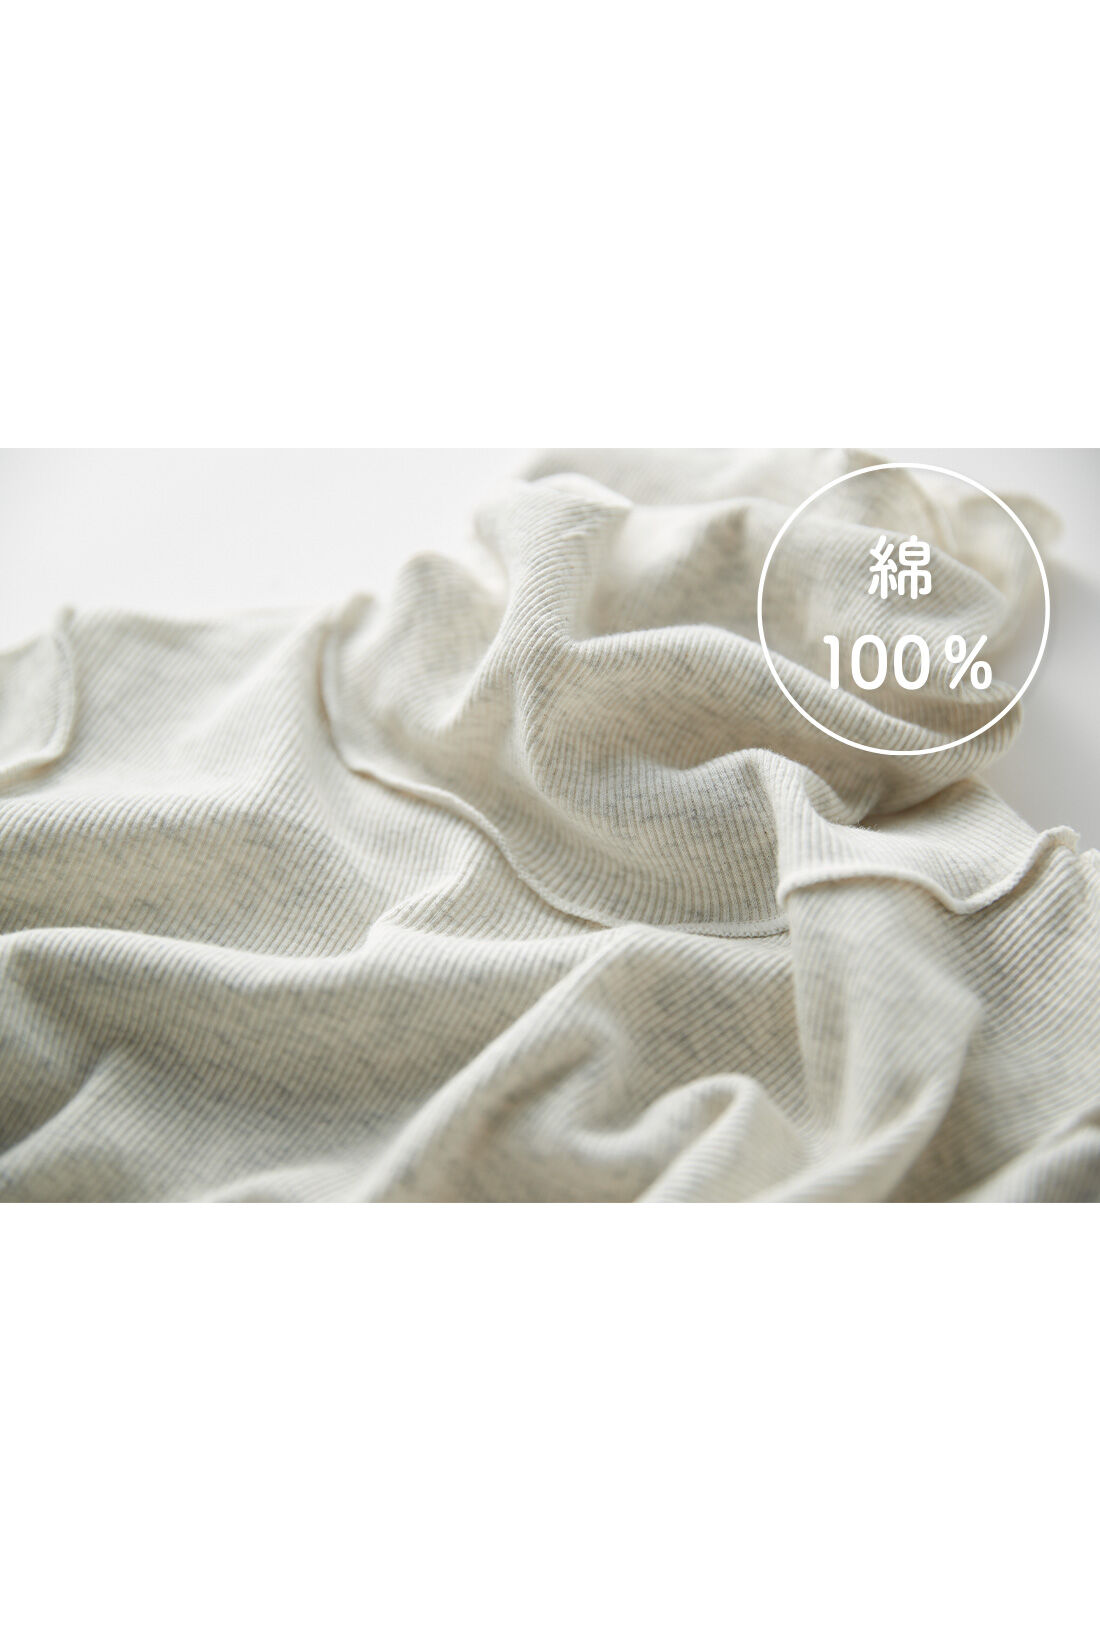 IEDIT|IEDIT[イディット]　綿100％エニワイズ加工の肌心地がやさしい インナーセット【パジャマインナー】|なめらかな肌ざわりにうっとり しっとり綿100％ 肌にチクチクしにくいアウトシーム仕様。